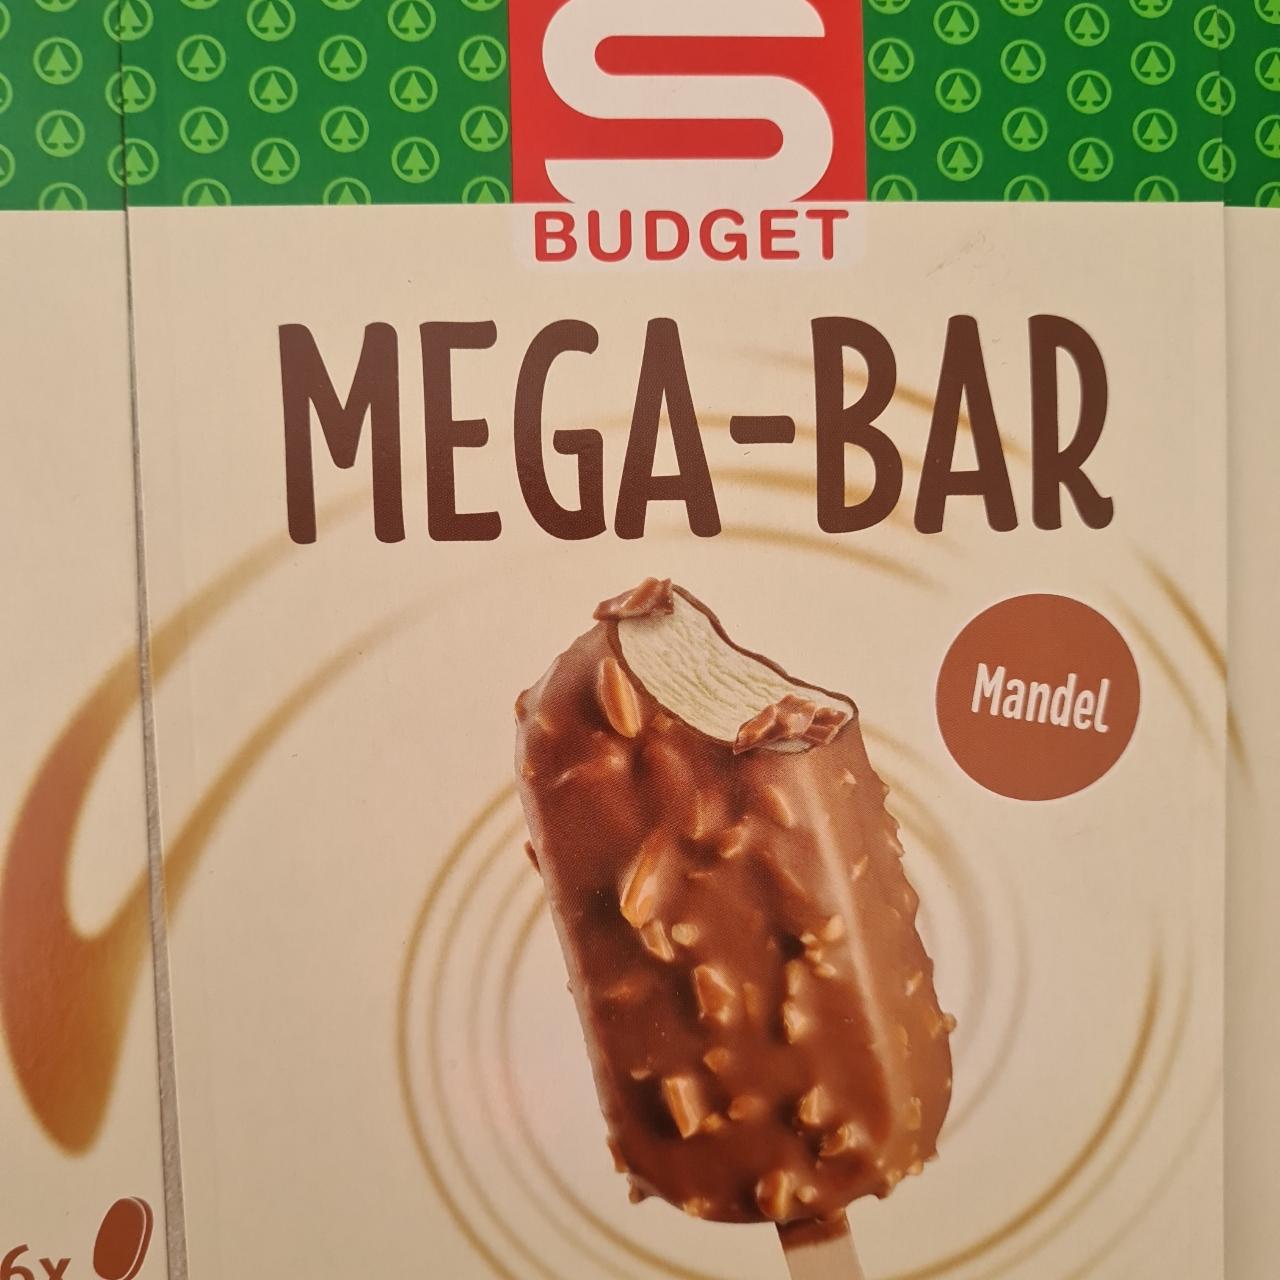 Fotografie - Mandel Mega-Bar S Budget